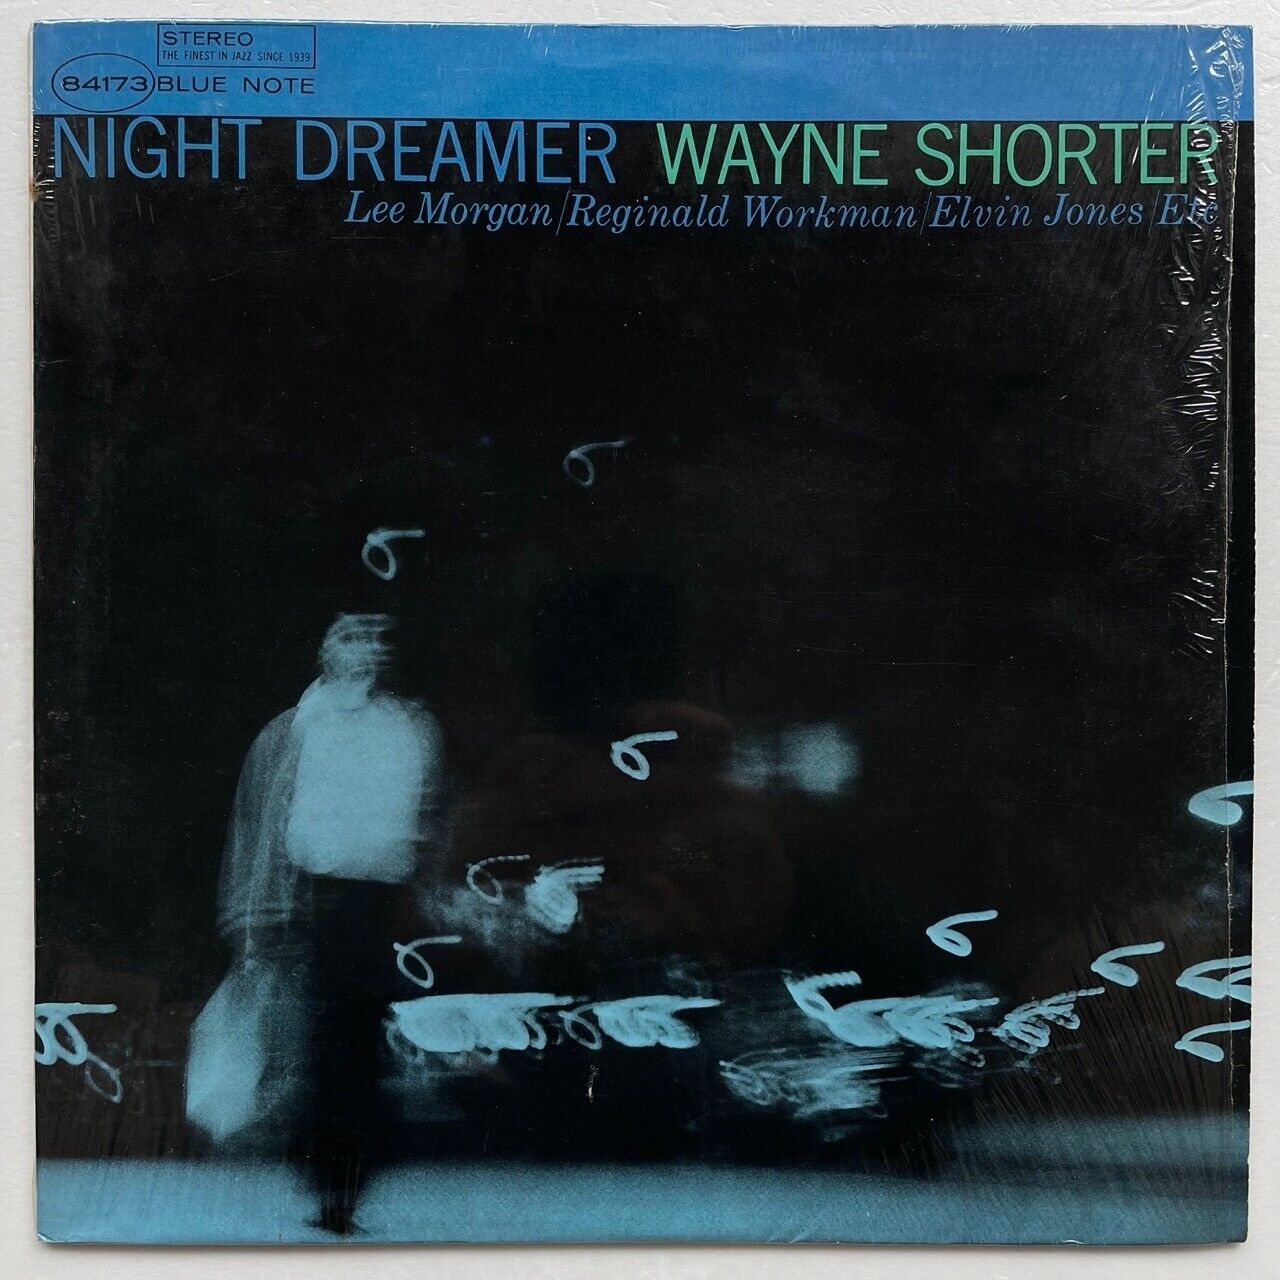 WAYNE SHORTER / NIGHT DREAMER on Blue Note VAN GELDER (Blue label) NM in shrink